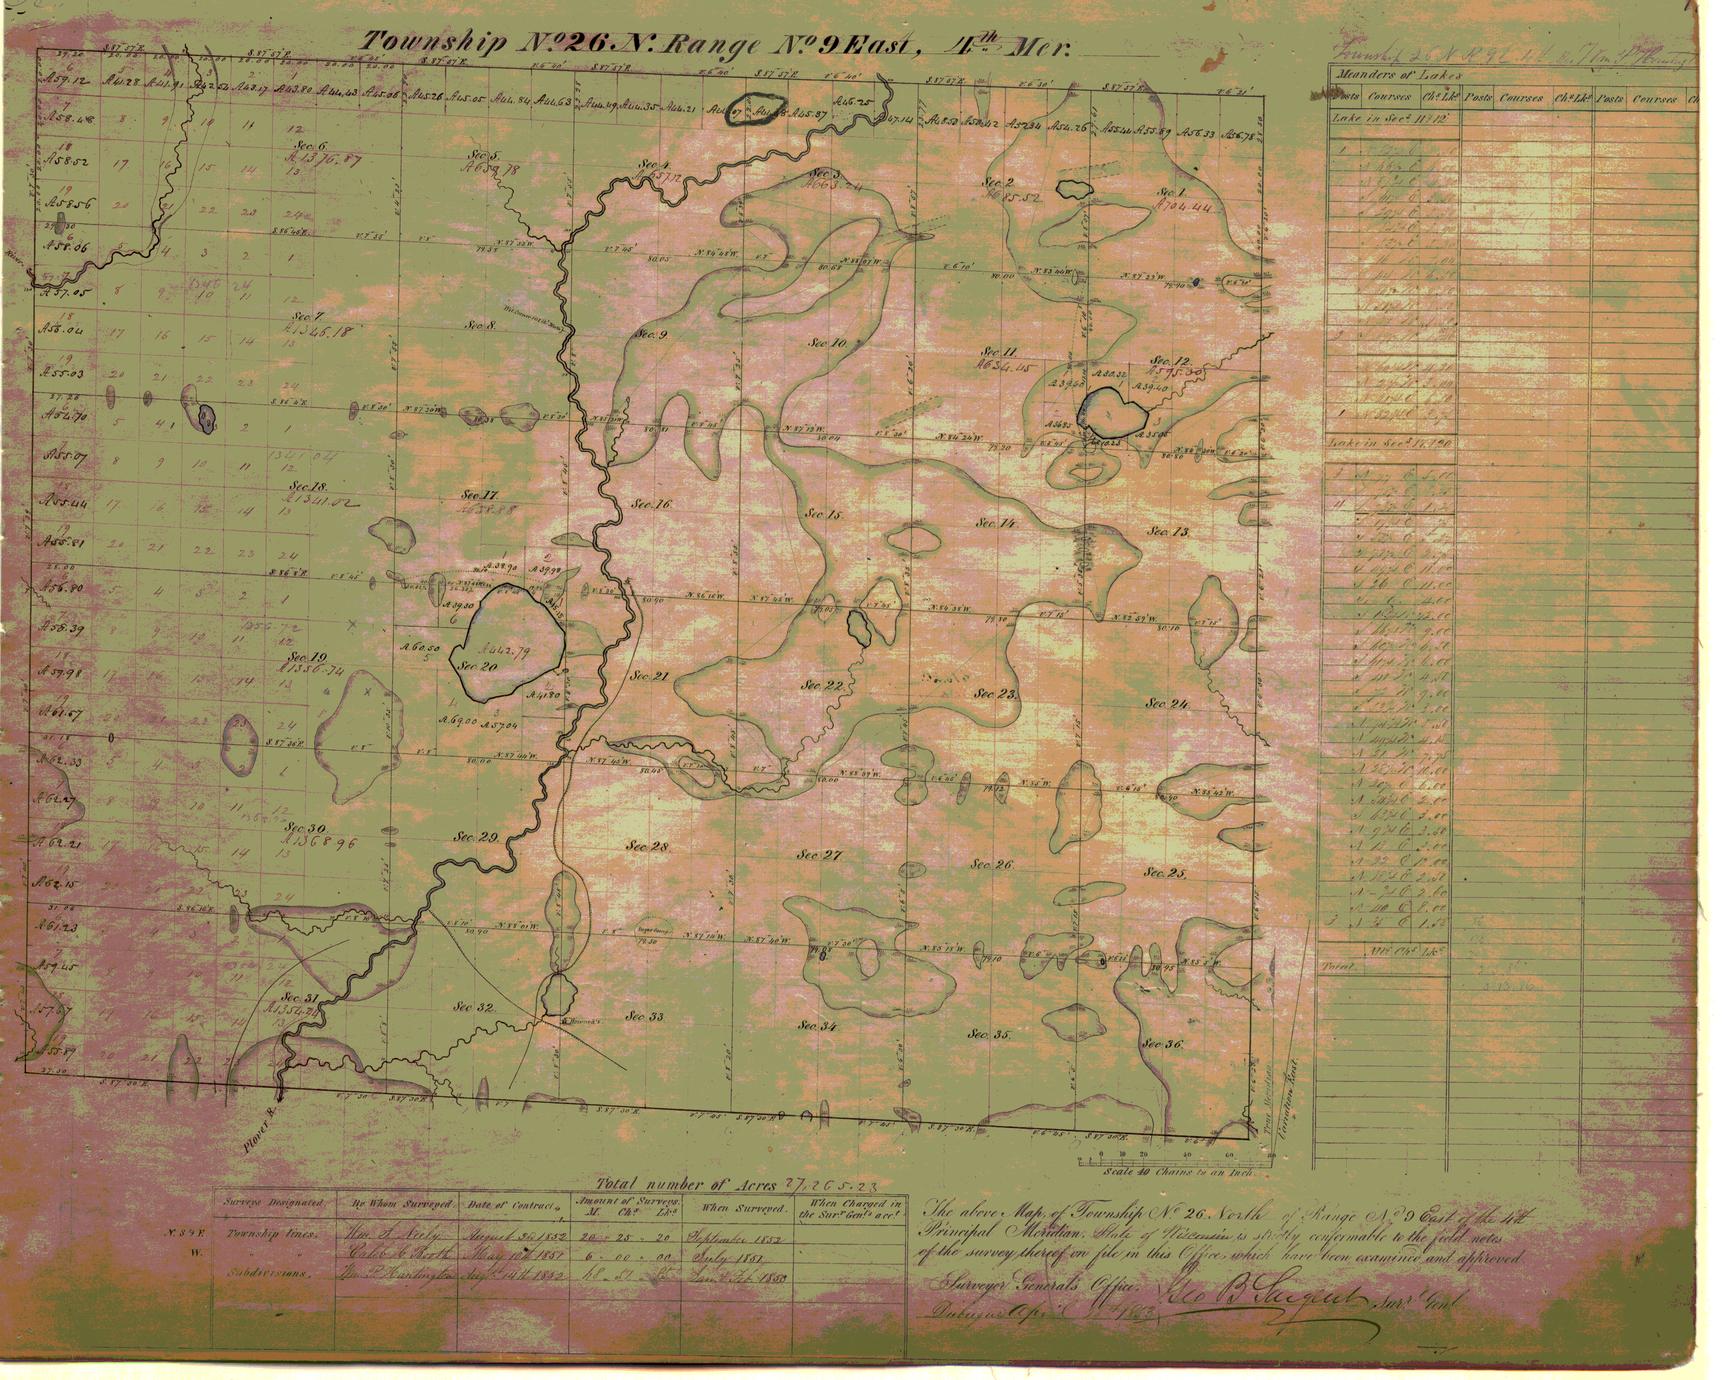 [Public Land Survey System map: Wisconsin Township 26 North, Range 09 East]